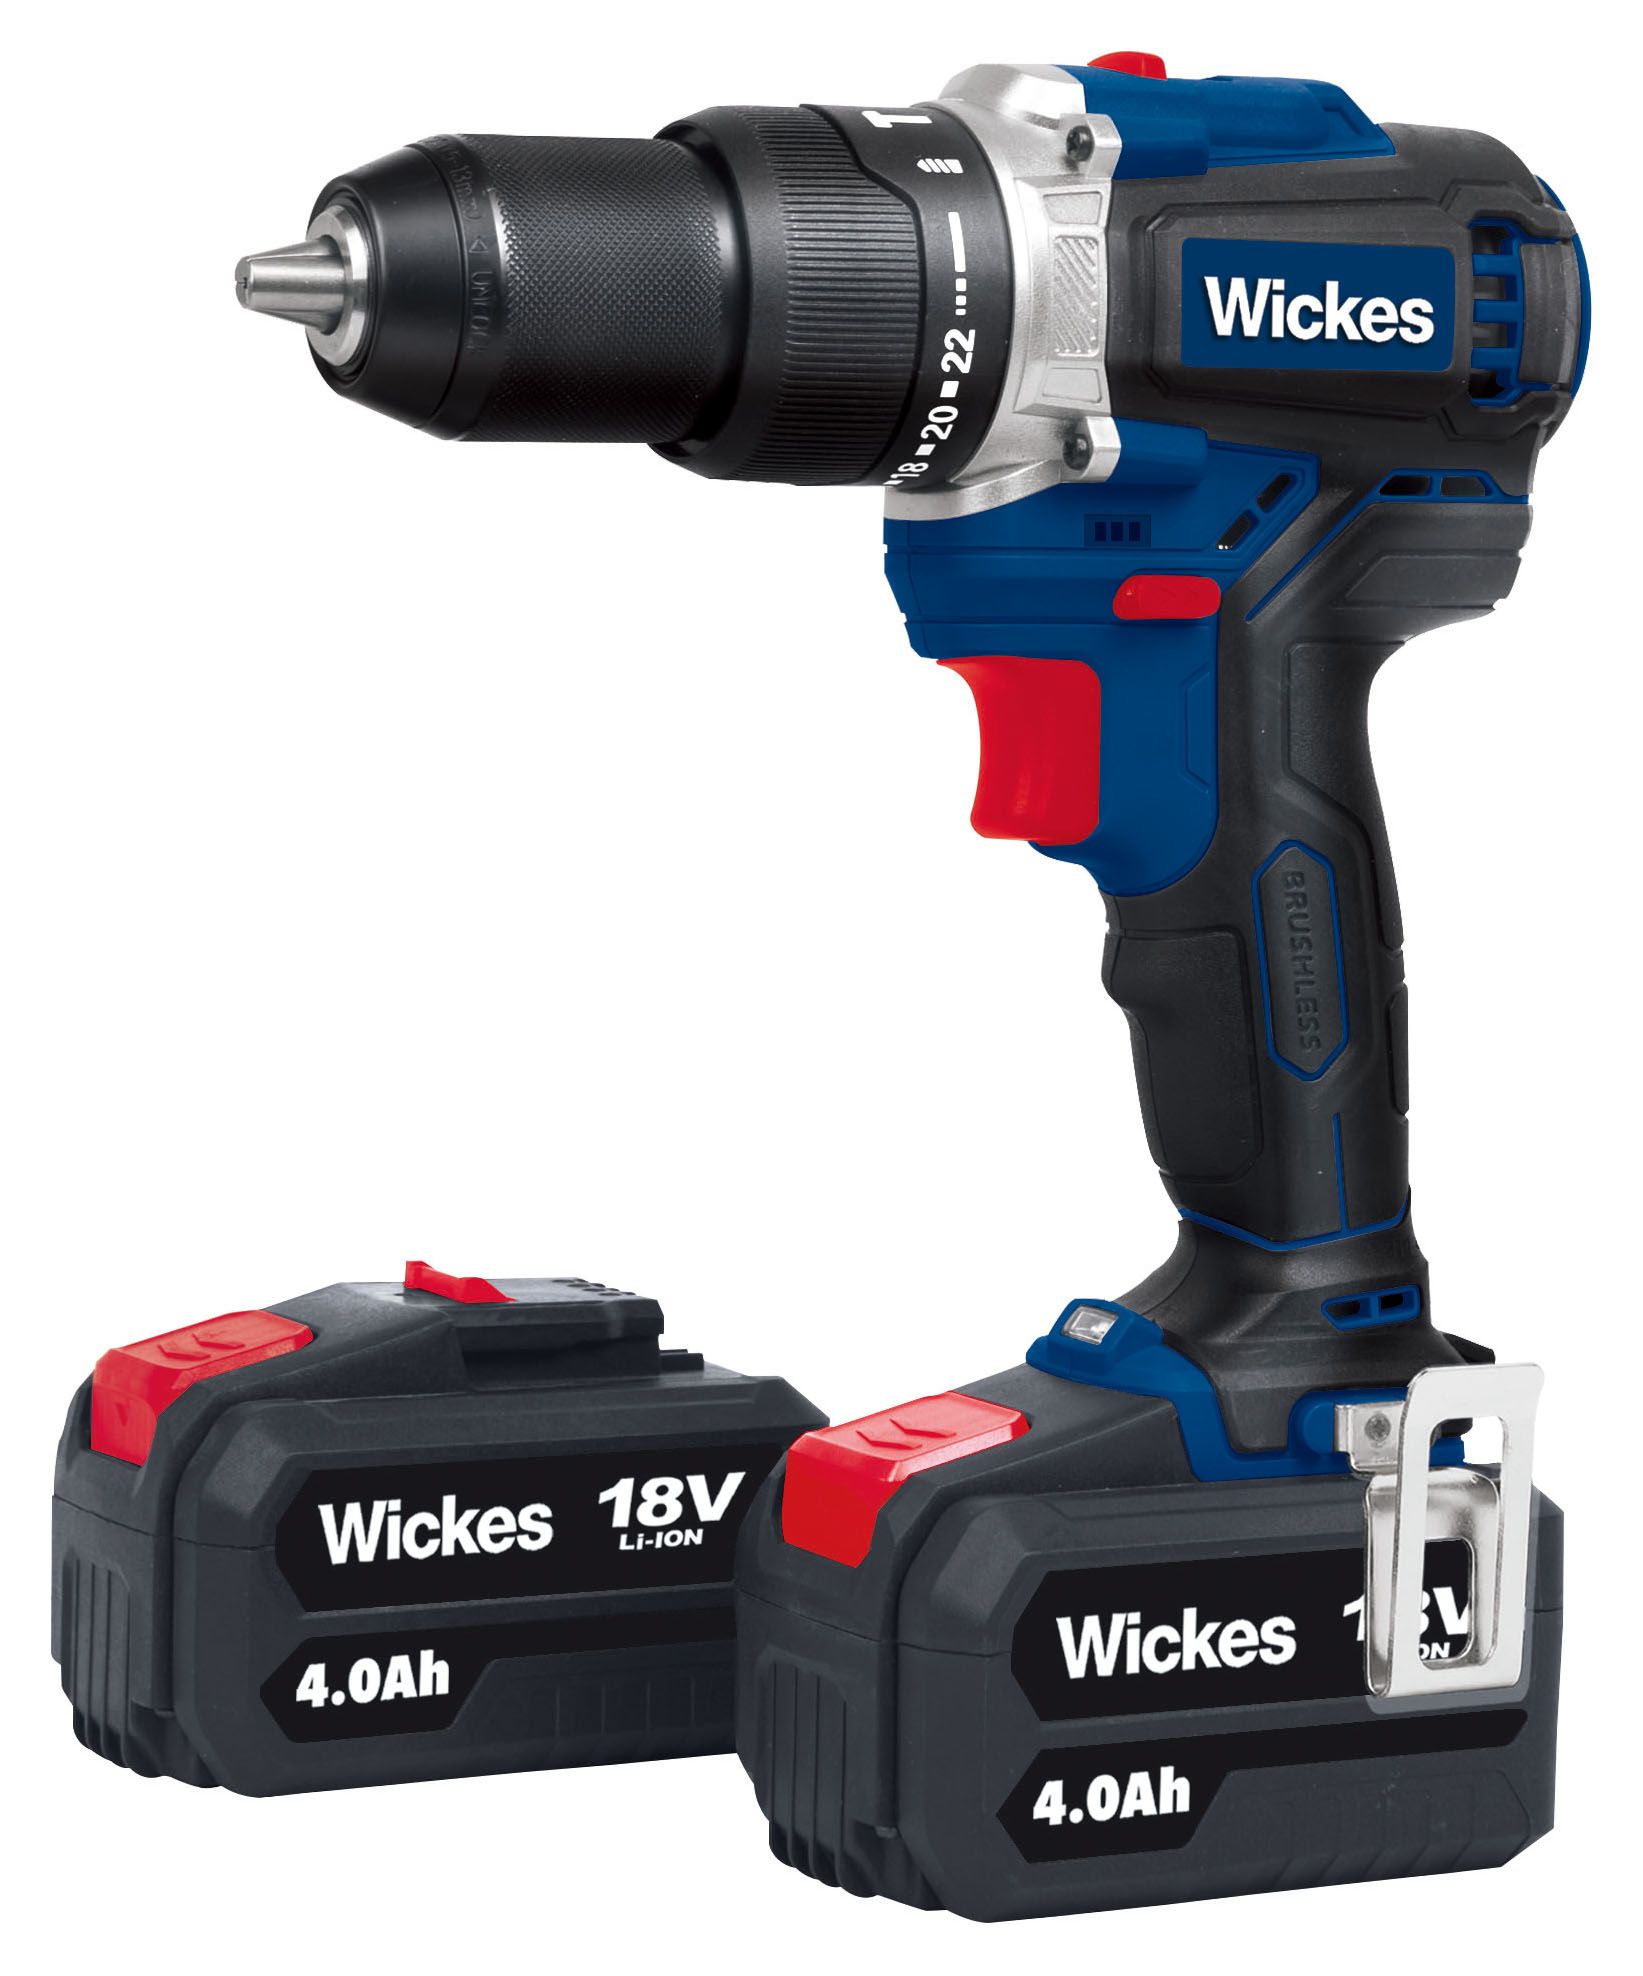 Wickes 18V 2 x 4.0Ah Li-ion Cordless Brushless Combi Drill